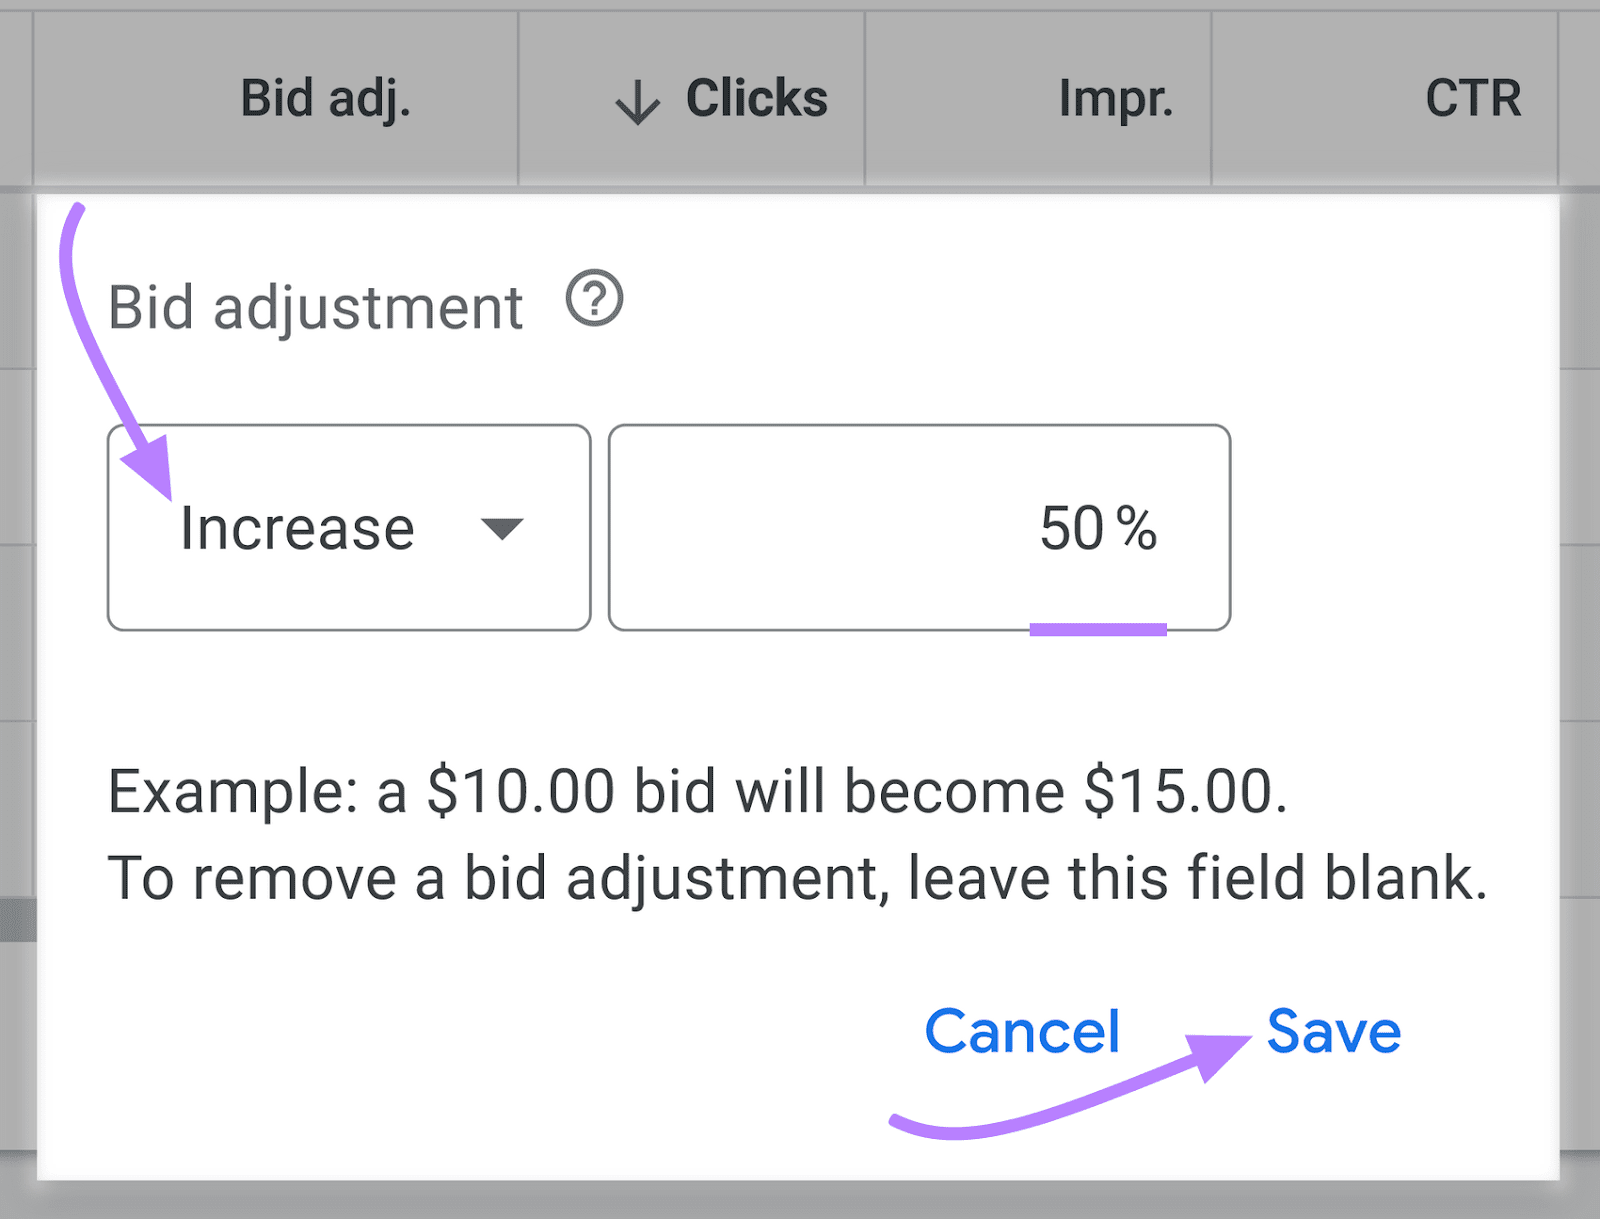 Bid adjustment set to "Increase 50%"